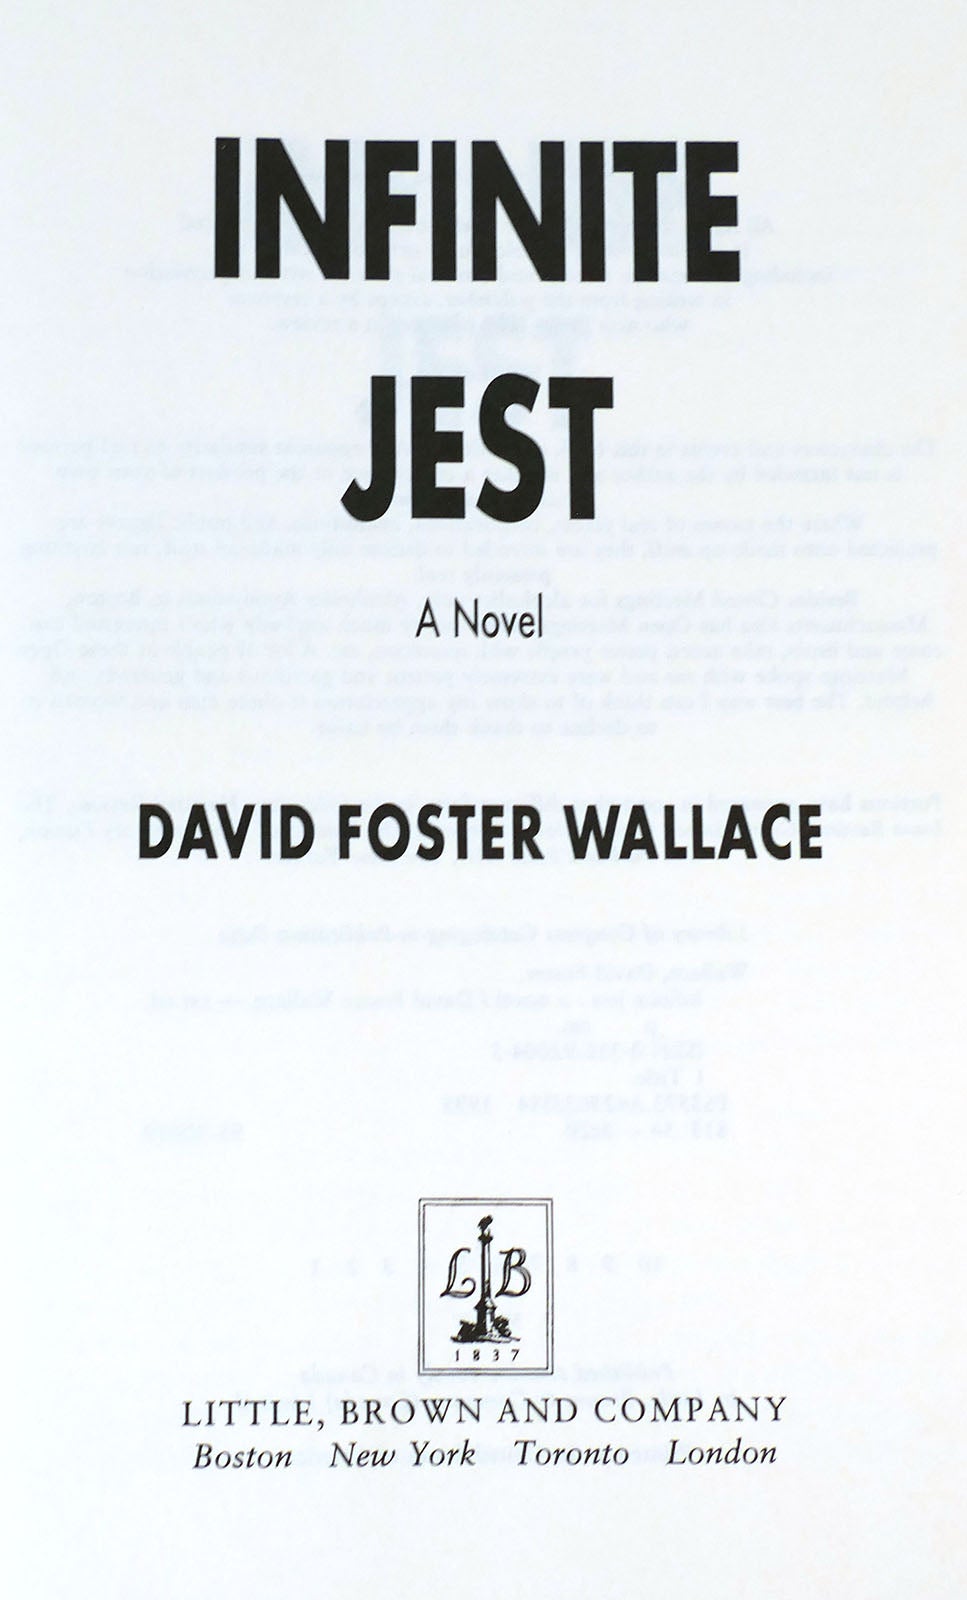 INFINITE JEST, David Foster Wallace